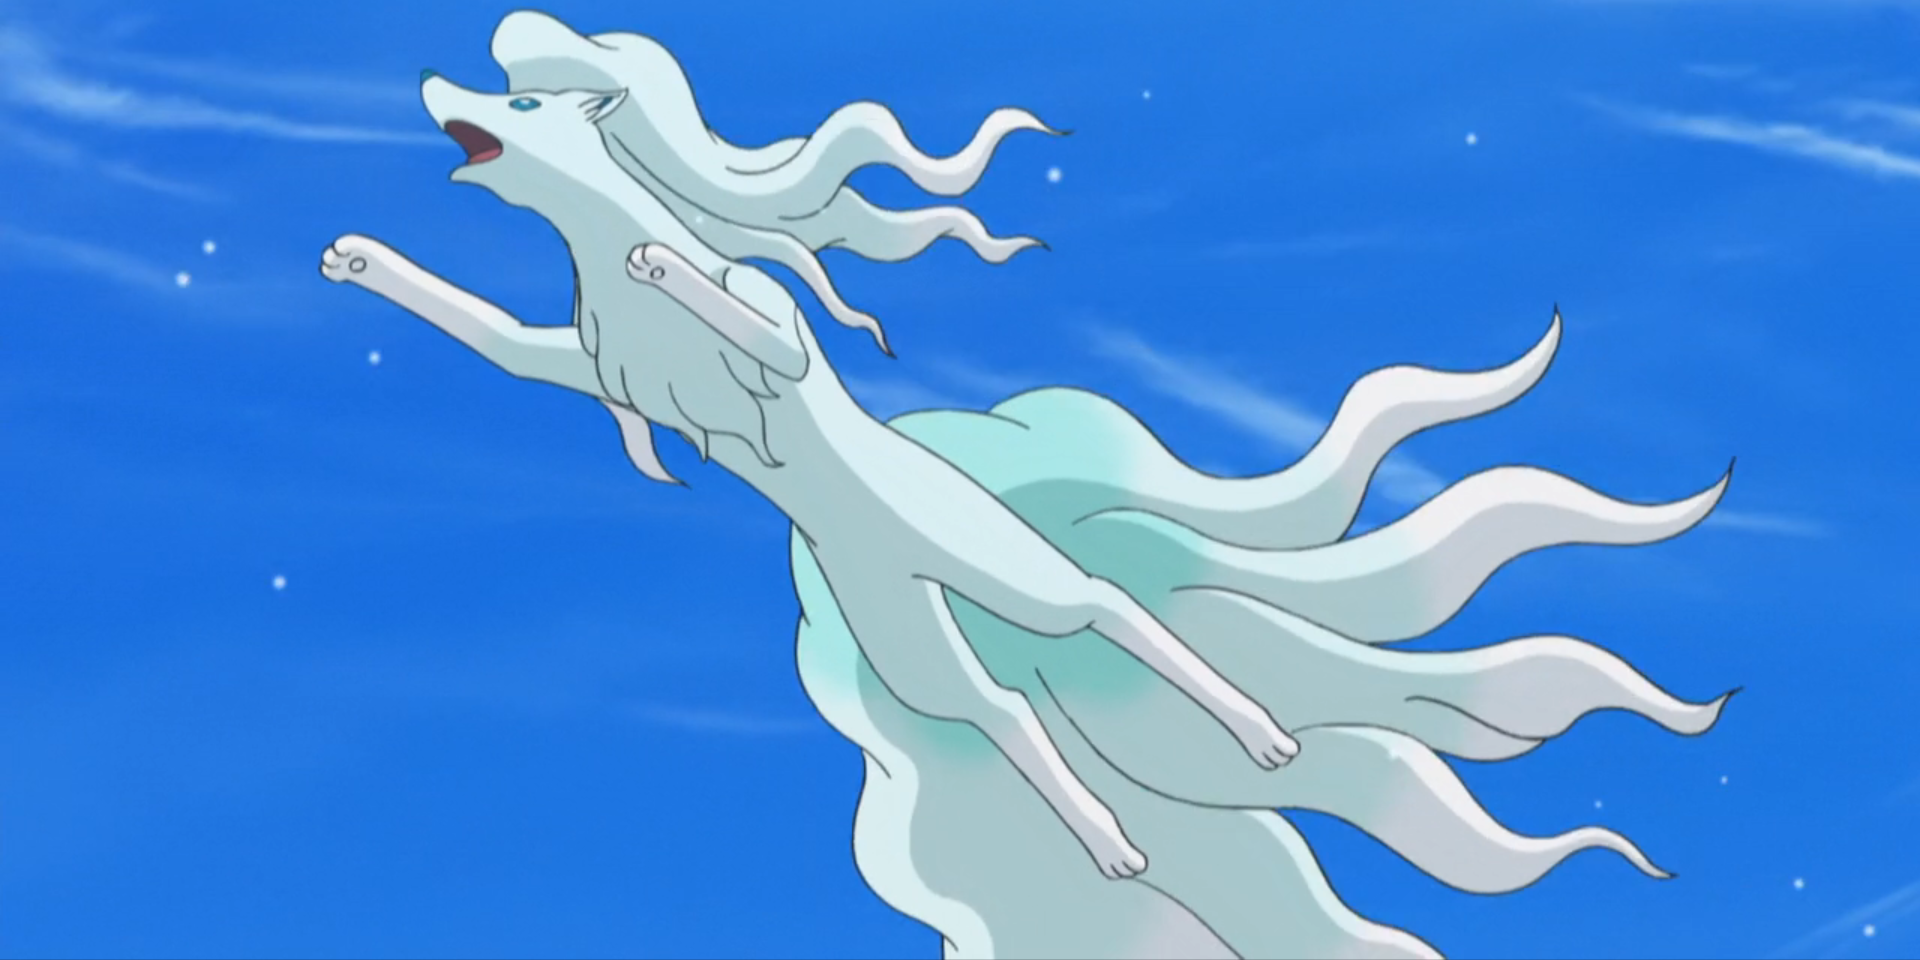 An Alolan Ninetales belonging to Sara in the Pokemon Sun & Moon anime jumping high across the sky